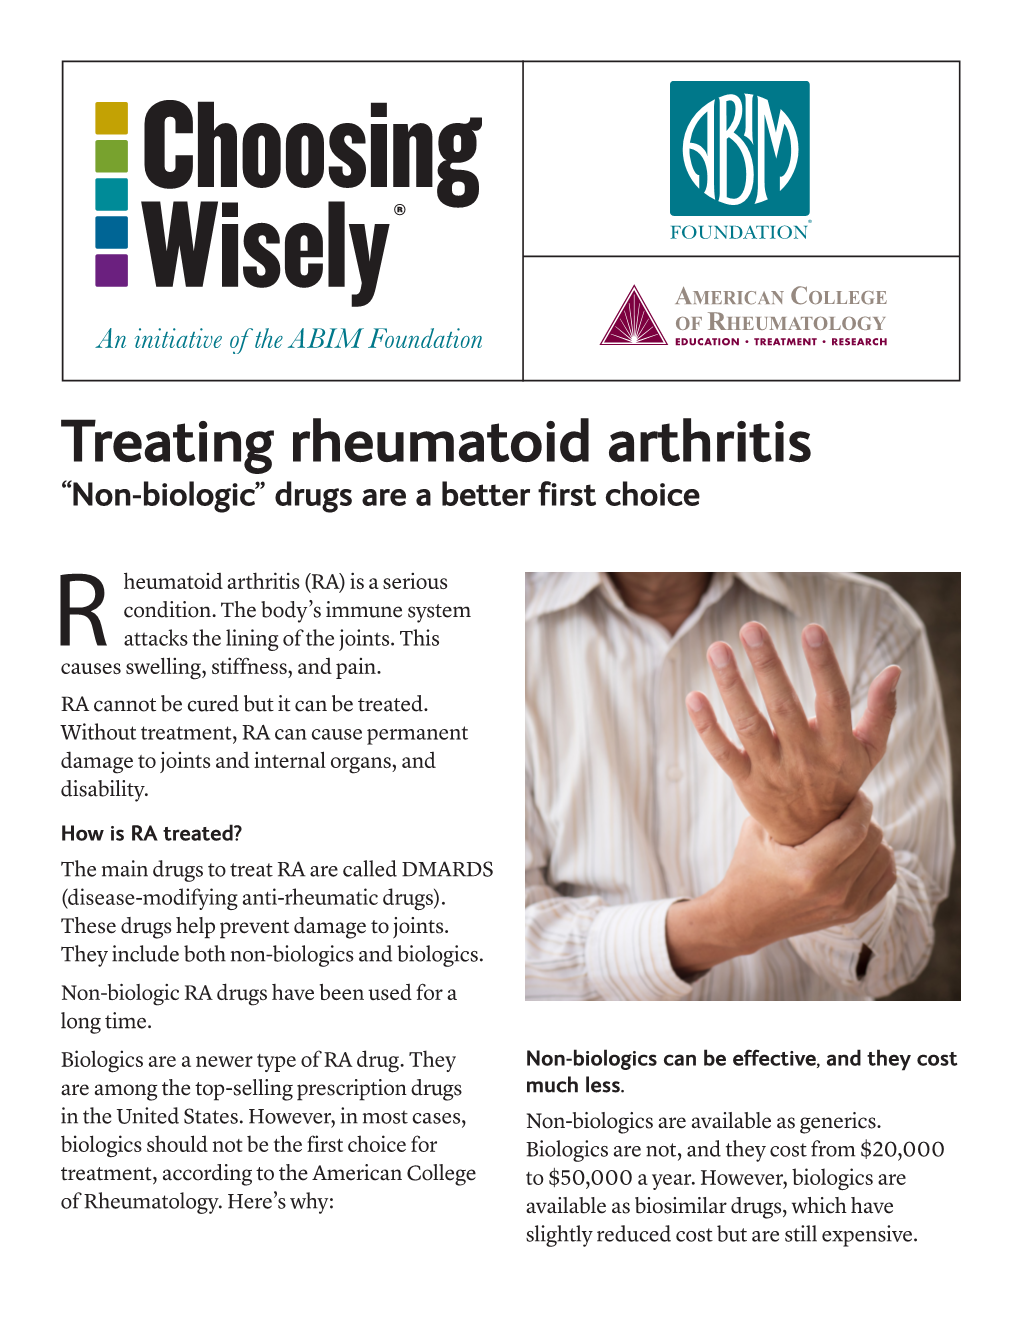 Treating Rheumatoid Arthritis “Non-Biologic” Drugs Are a Better First Choice